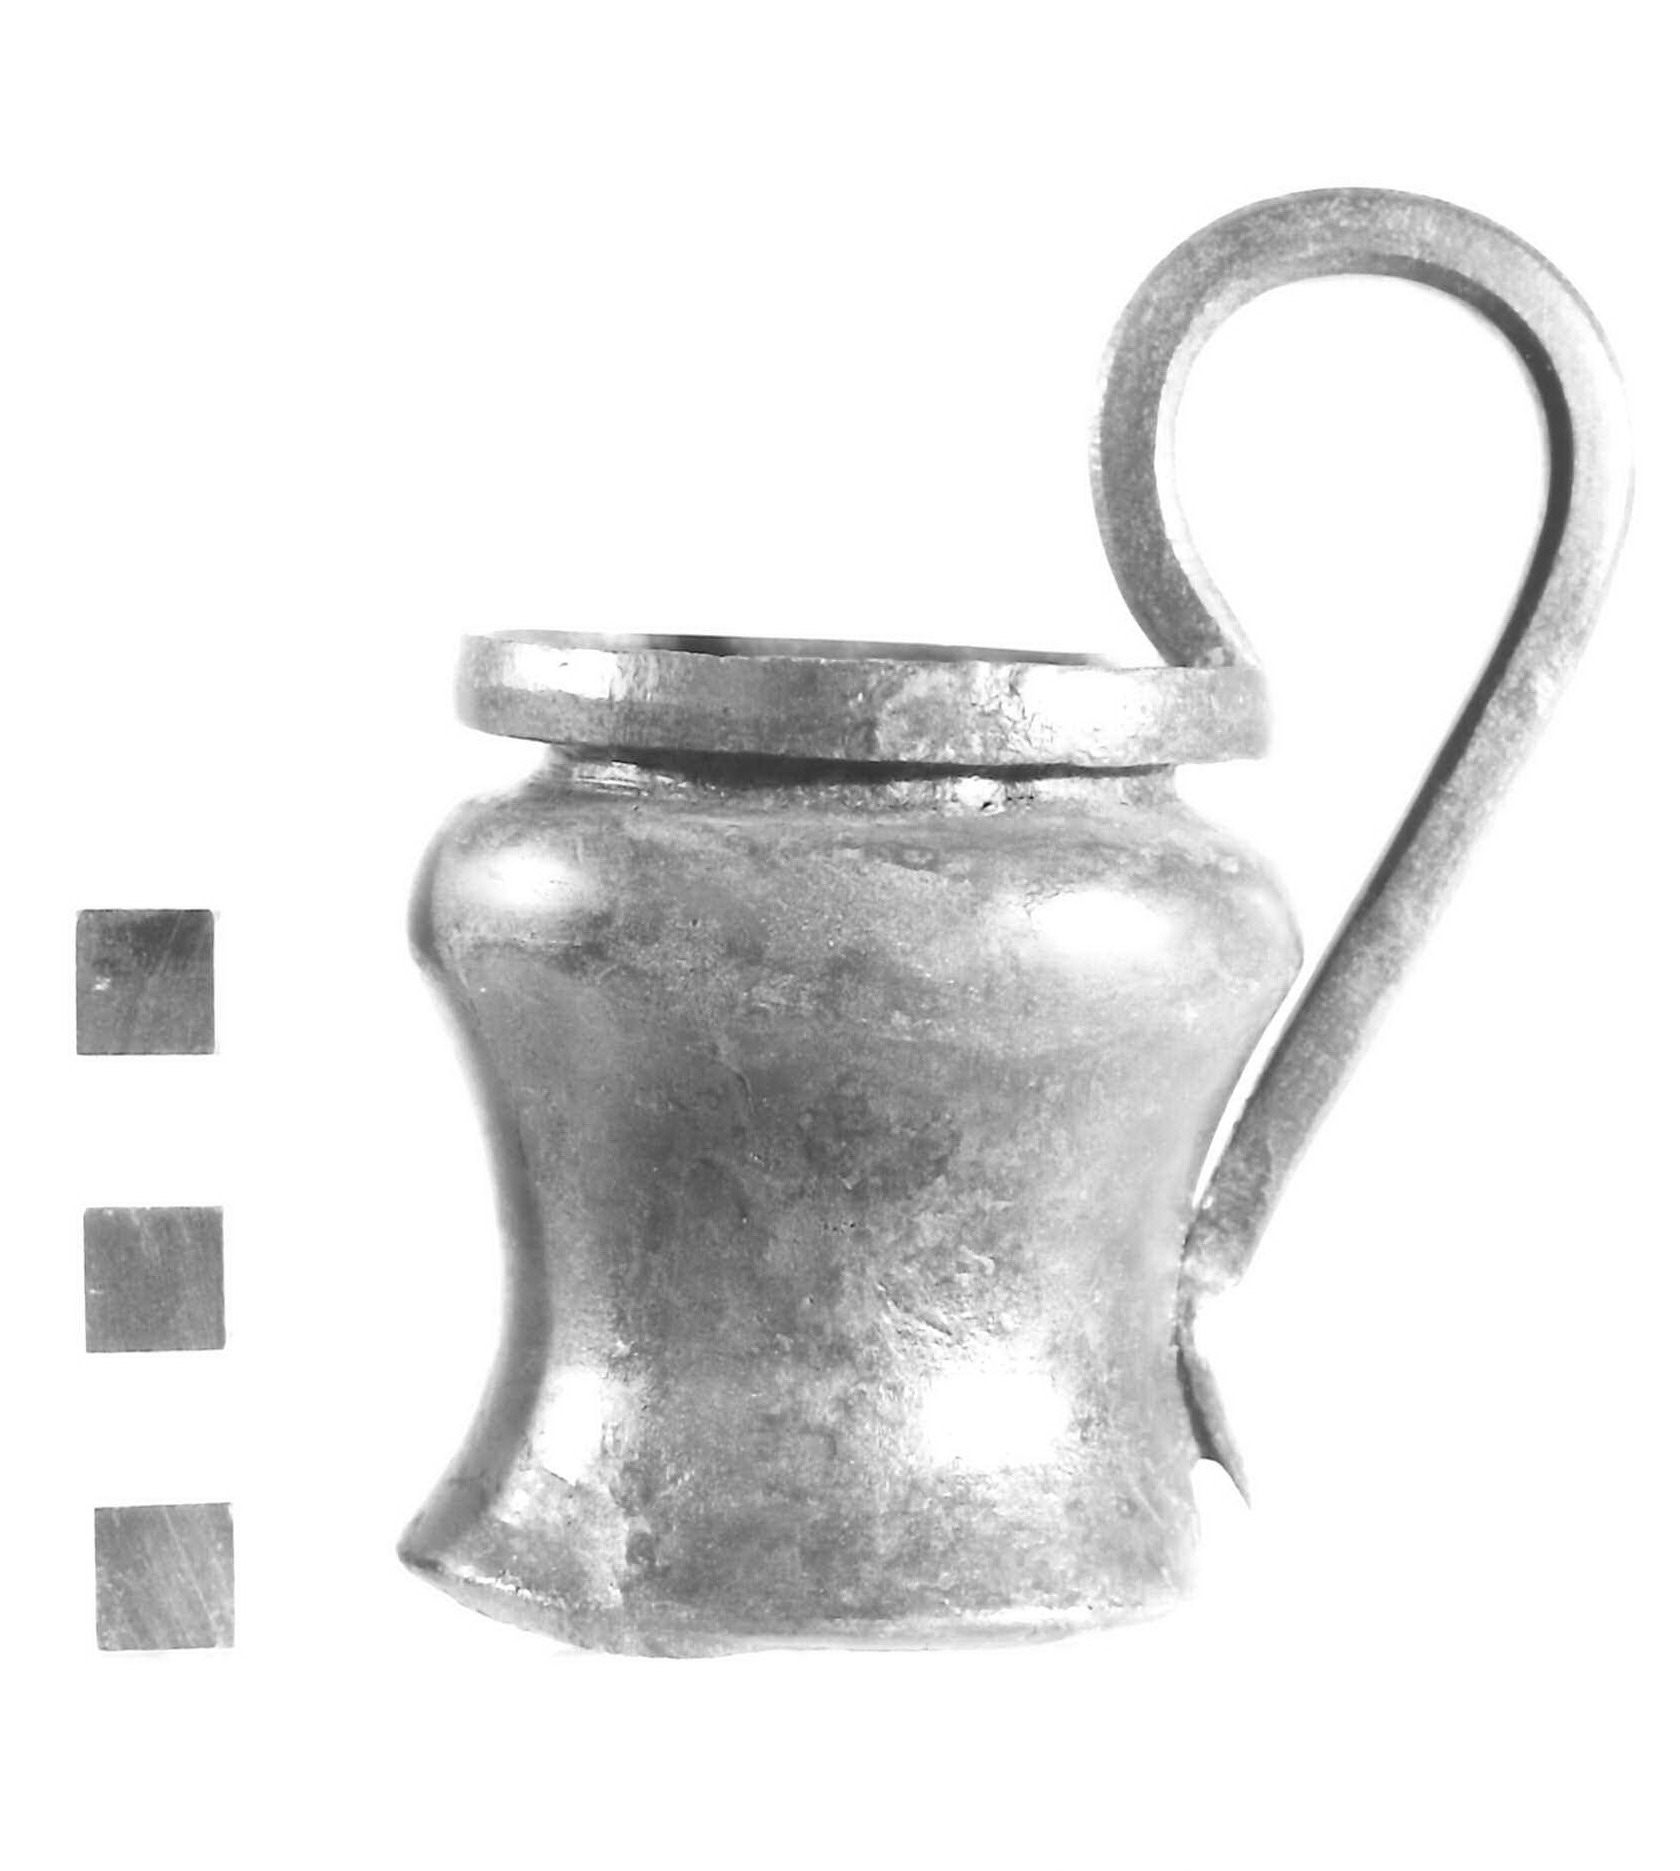 kyathos a rocchetto - produzione etrusca (sec. IV a.C)